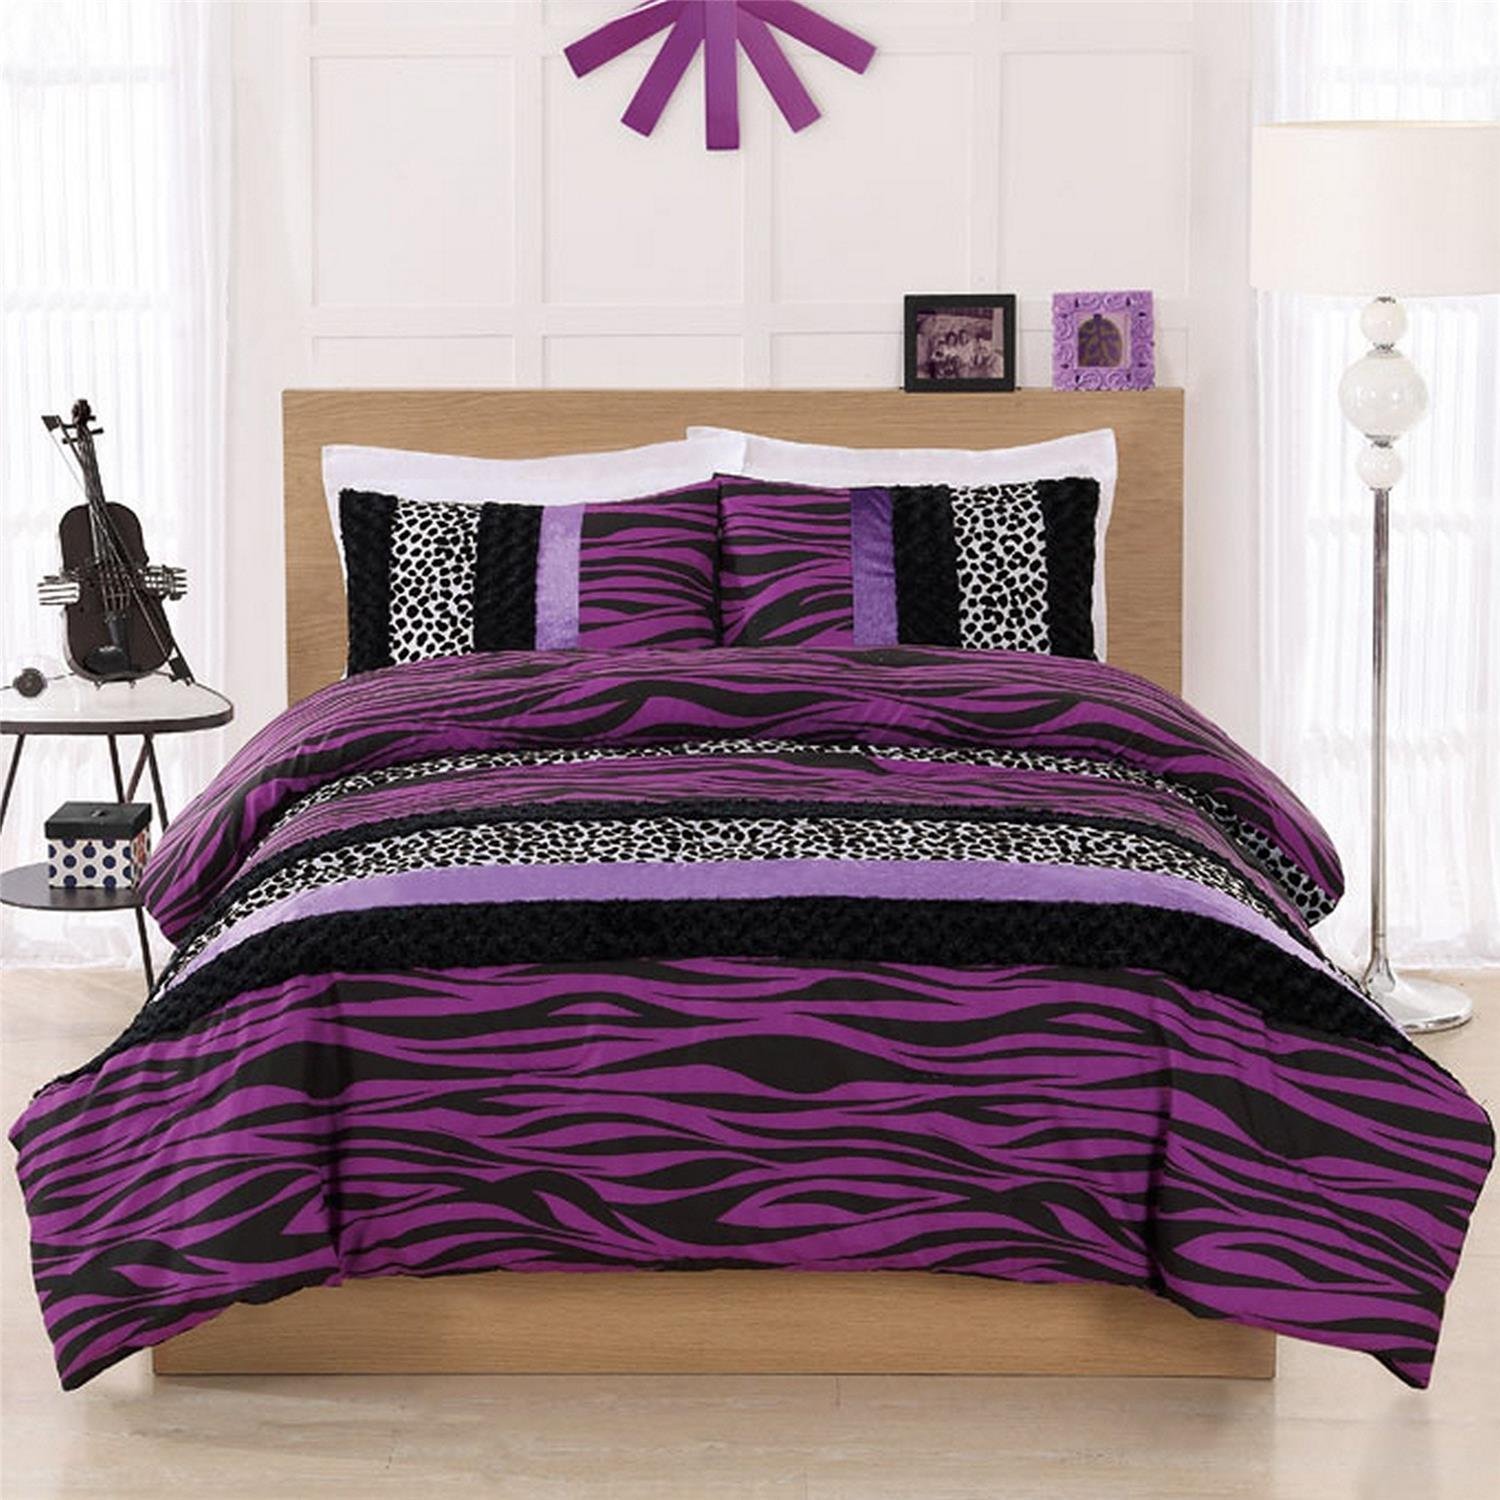 cheetah print and purple bedroom photo - 7